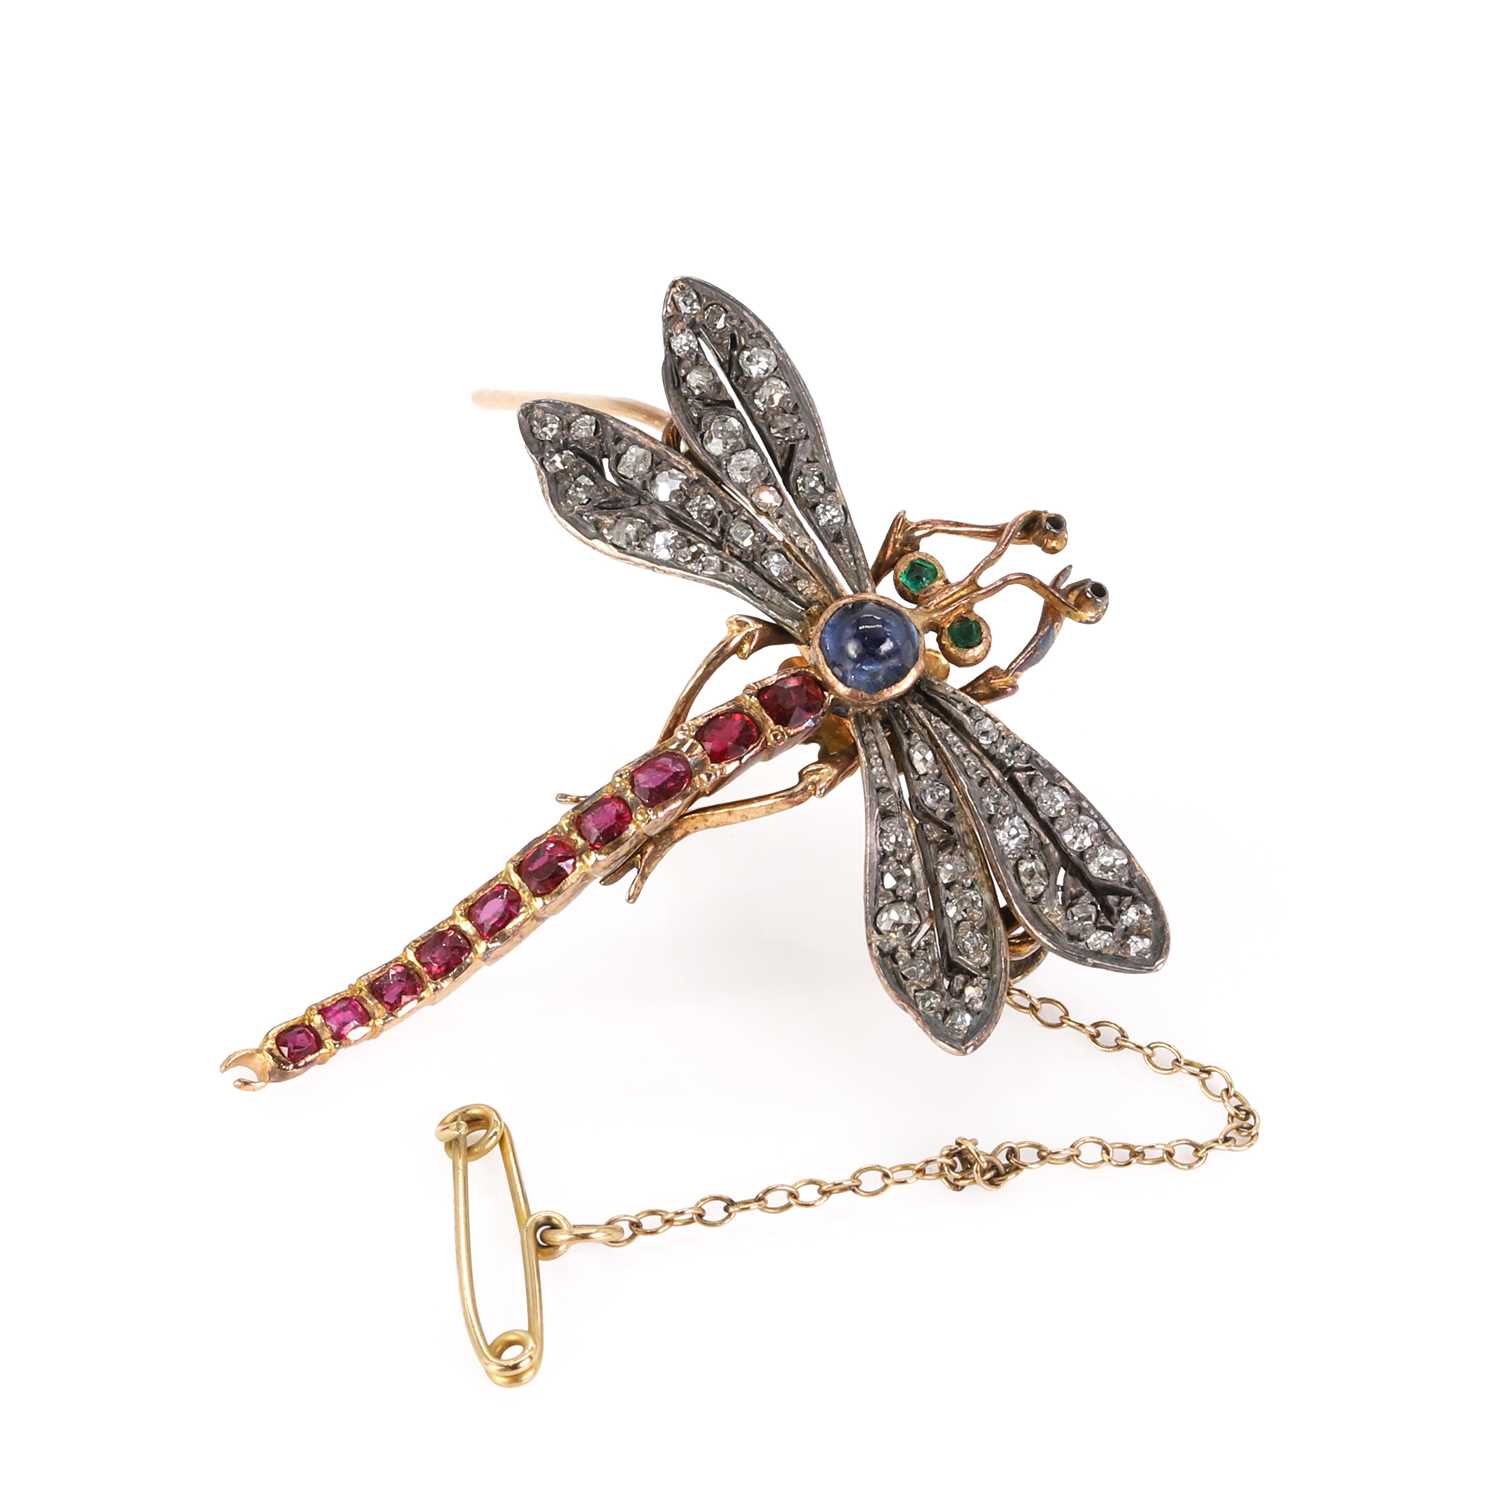 A diamond and gemstone set dragonfly brooch, c.1890,